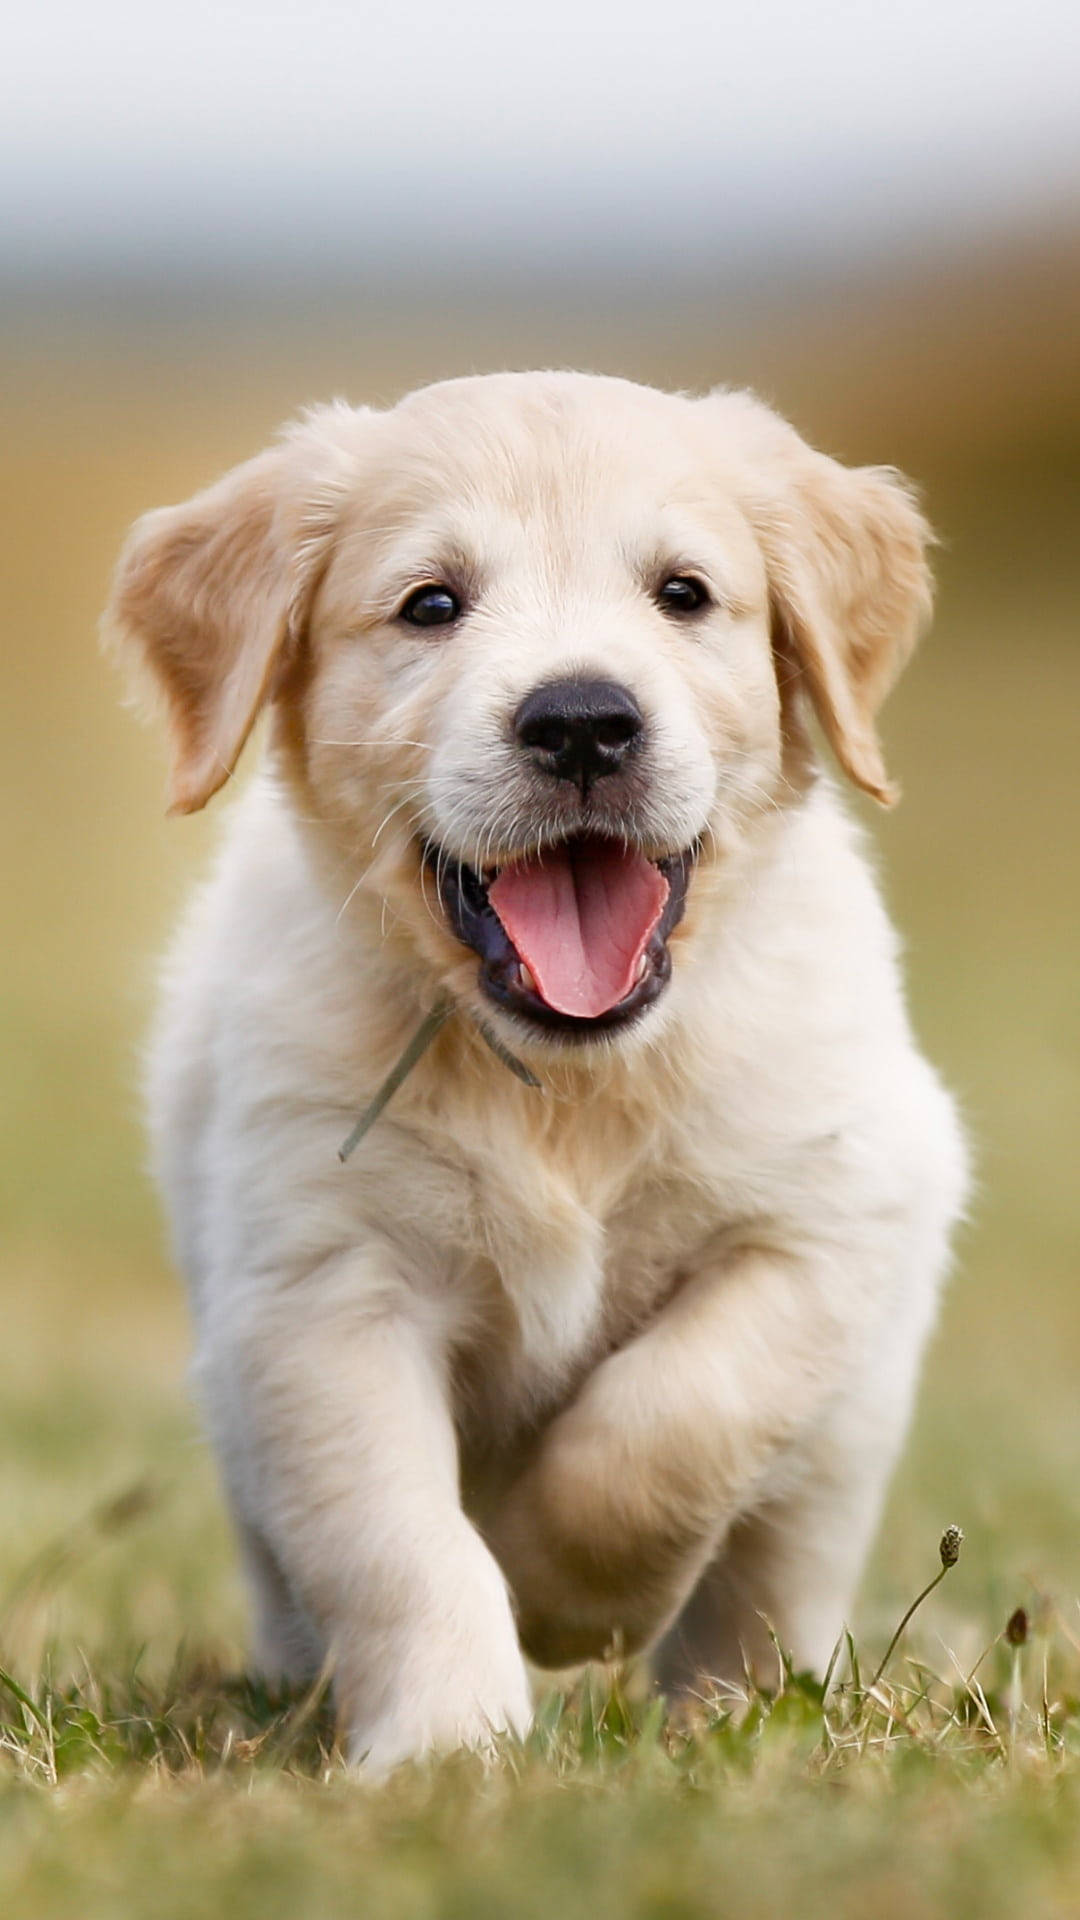 HD desktop wallpaper Dogs Dog Animal Golden Retriever download free  picture 1151992